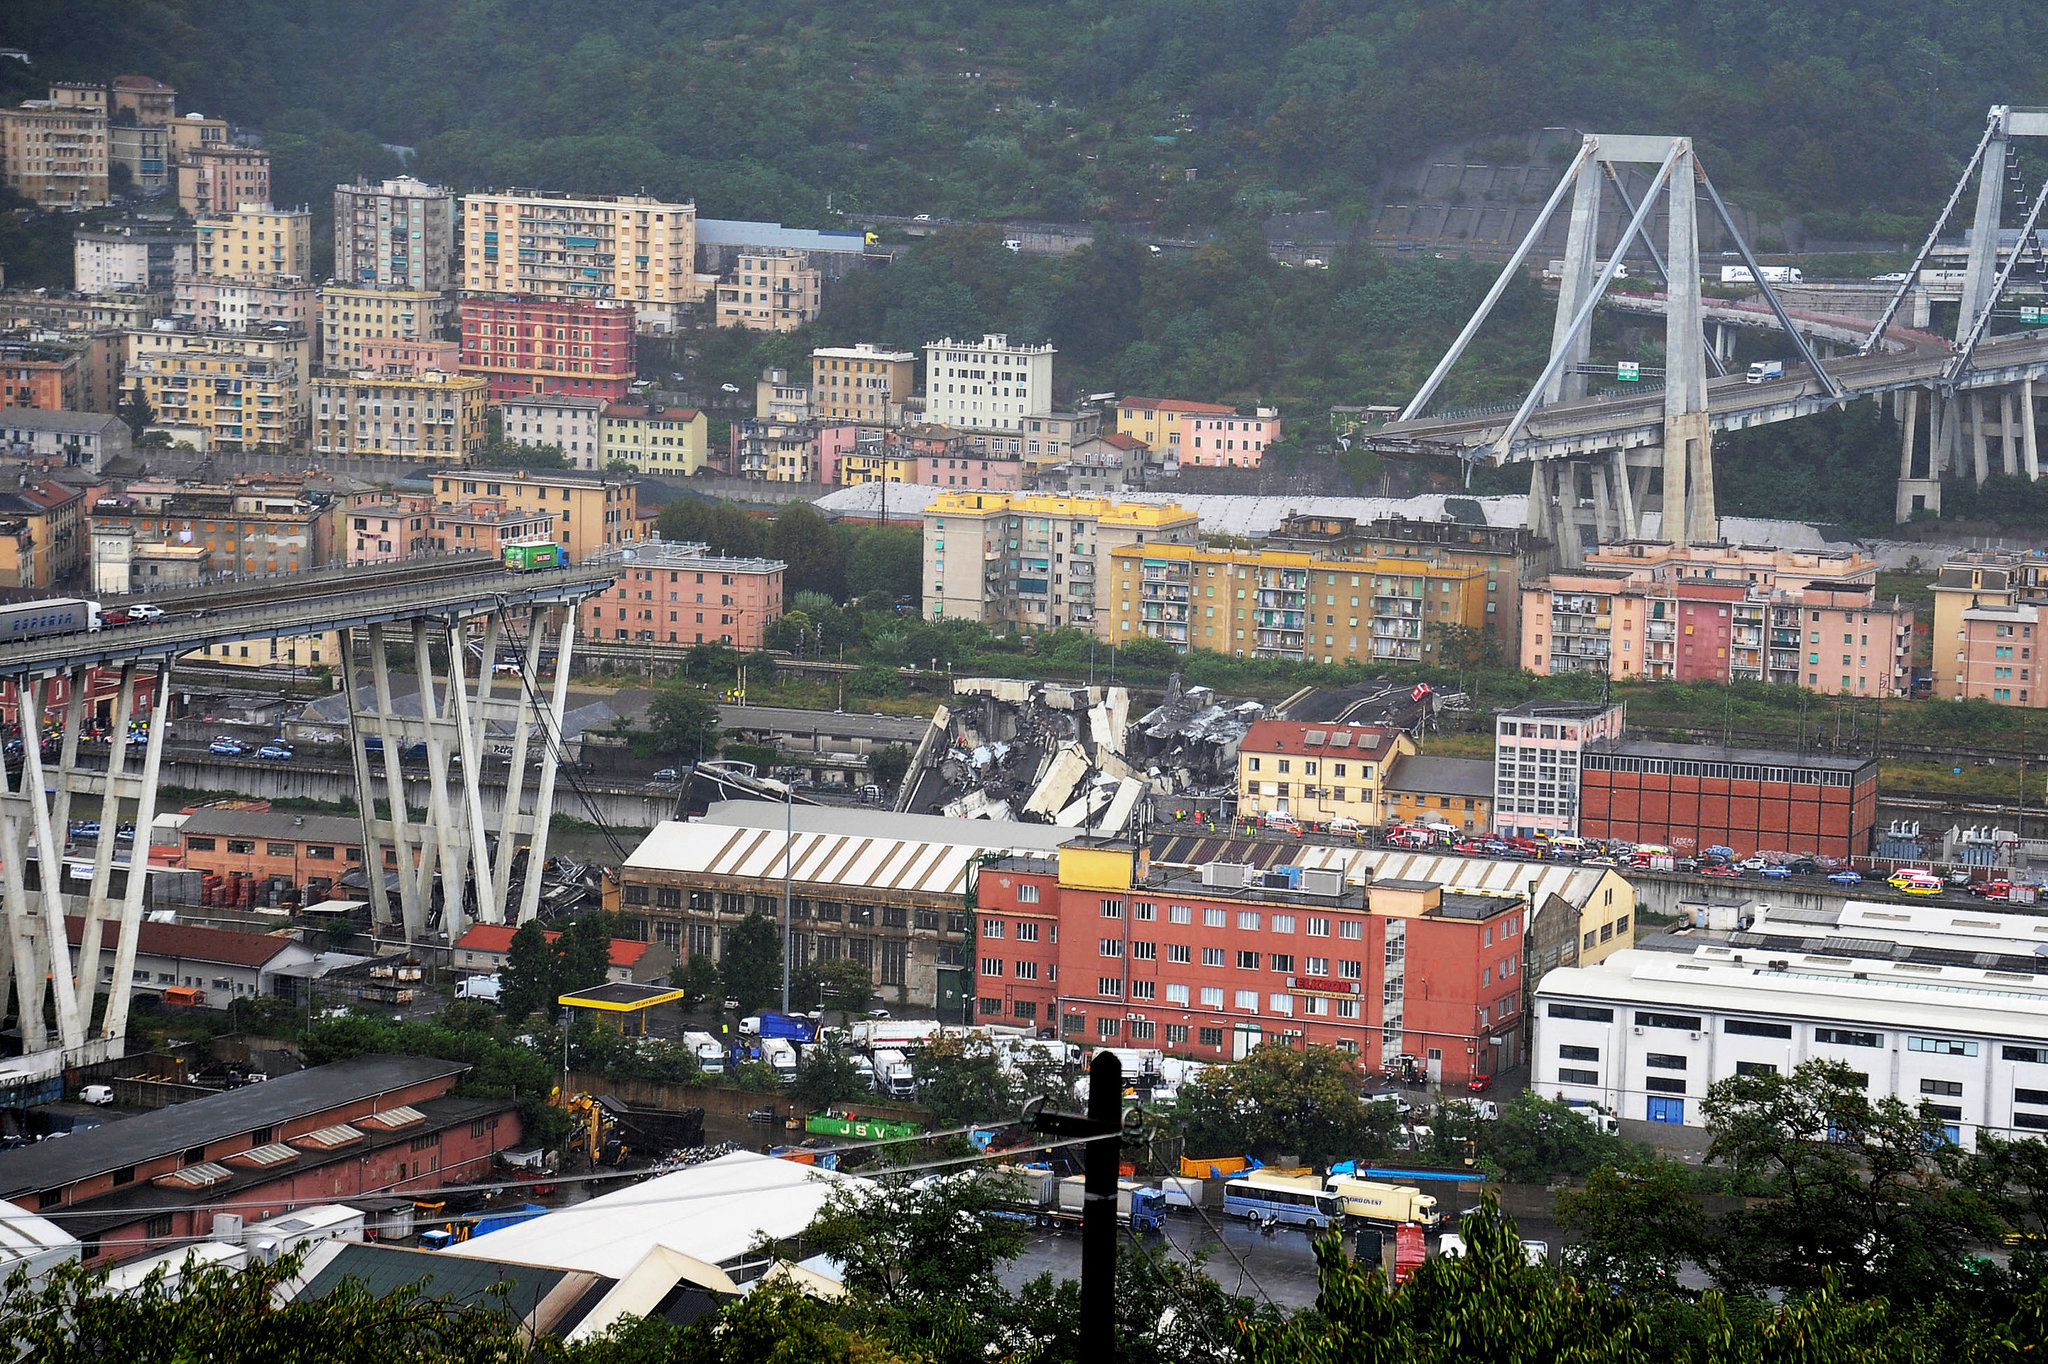 Genoa bridge collapse killed 43 people